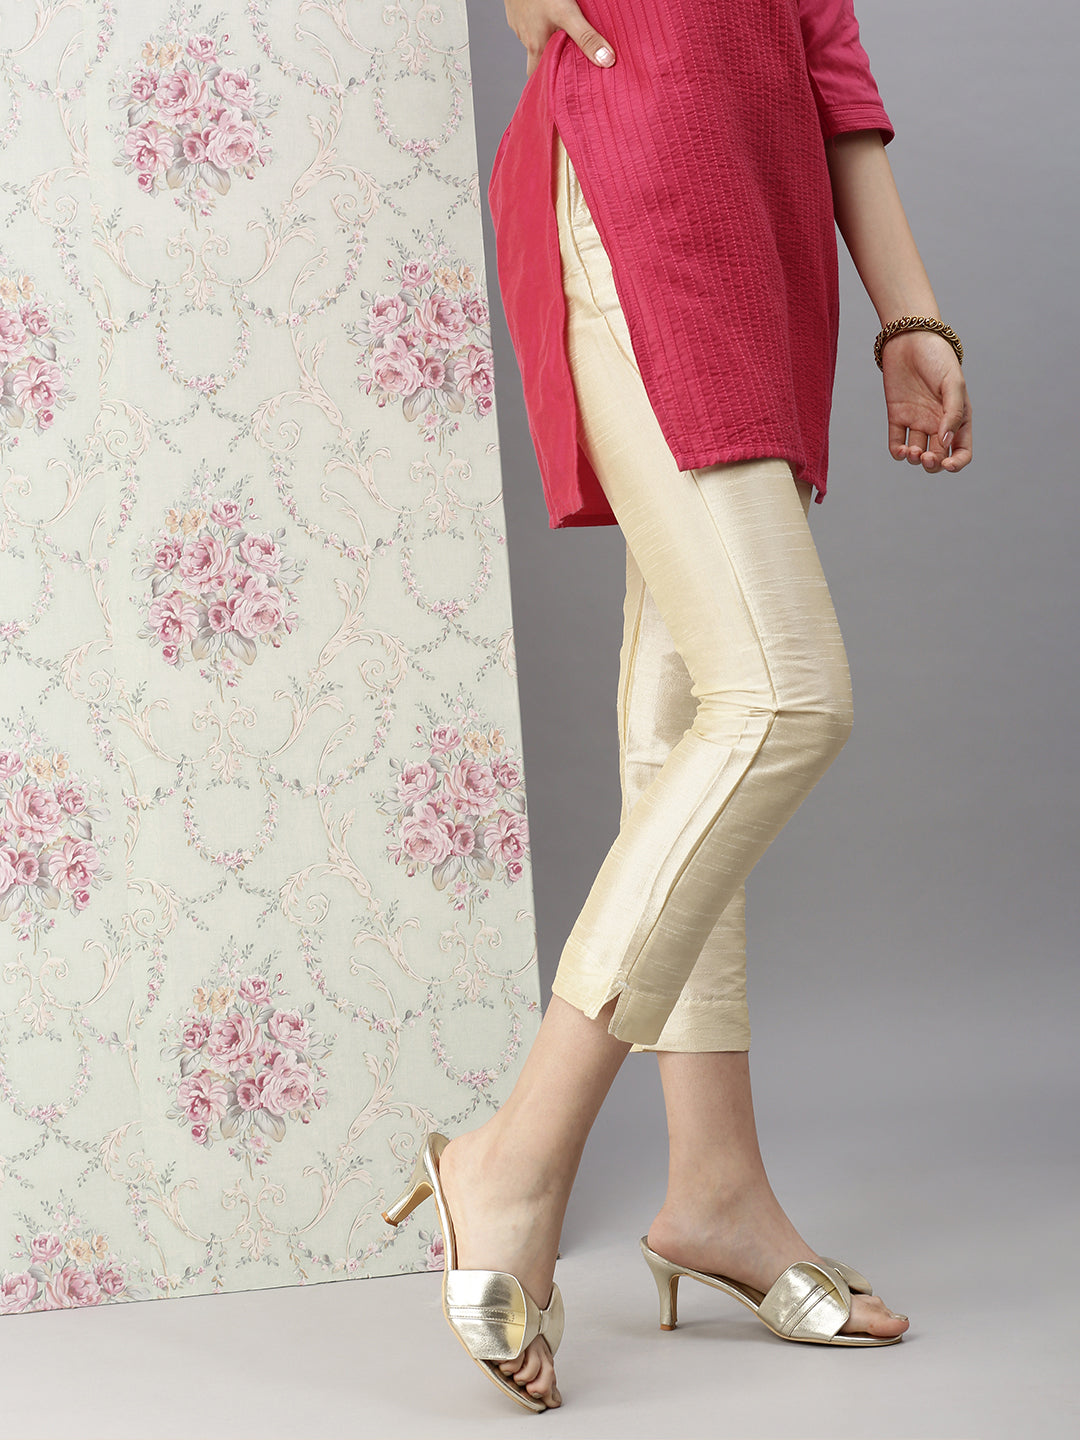 Jade Vine Cotton Ladies Ankle Length Pant at Rs 180/piece in Kolkata | ID:  21275176362